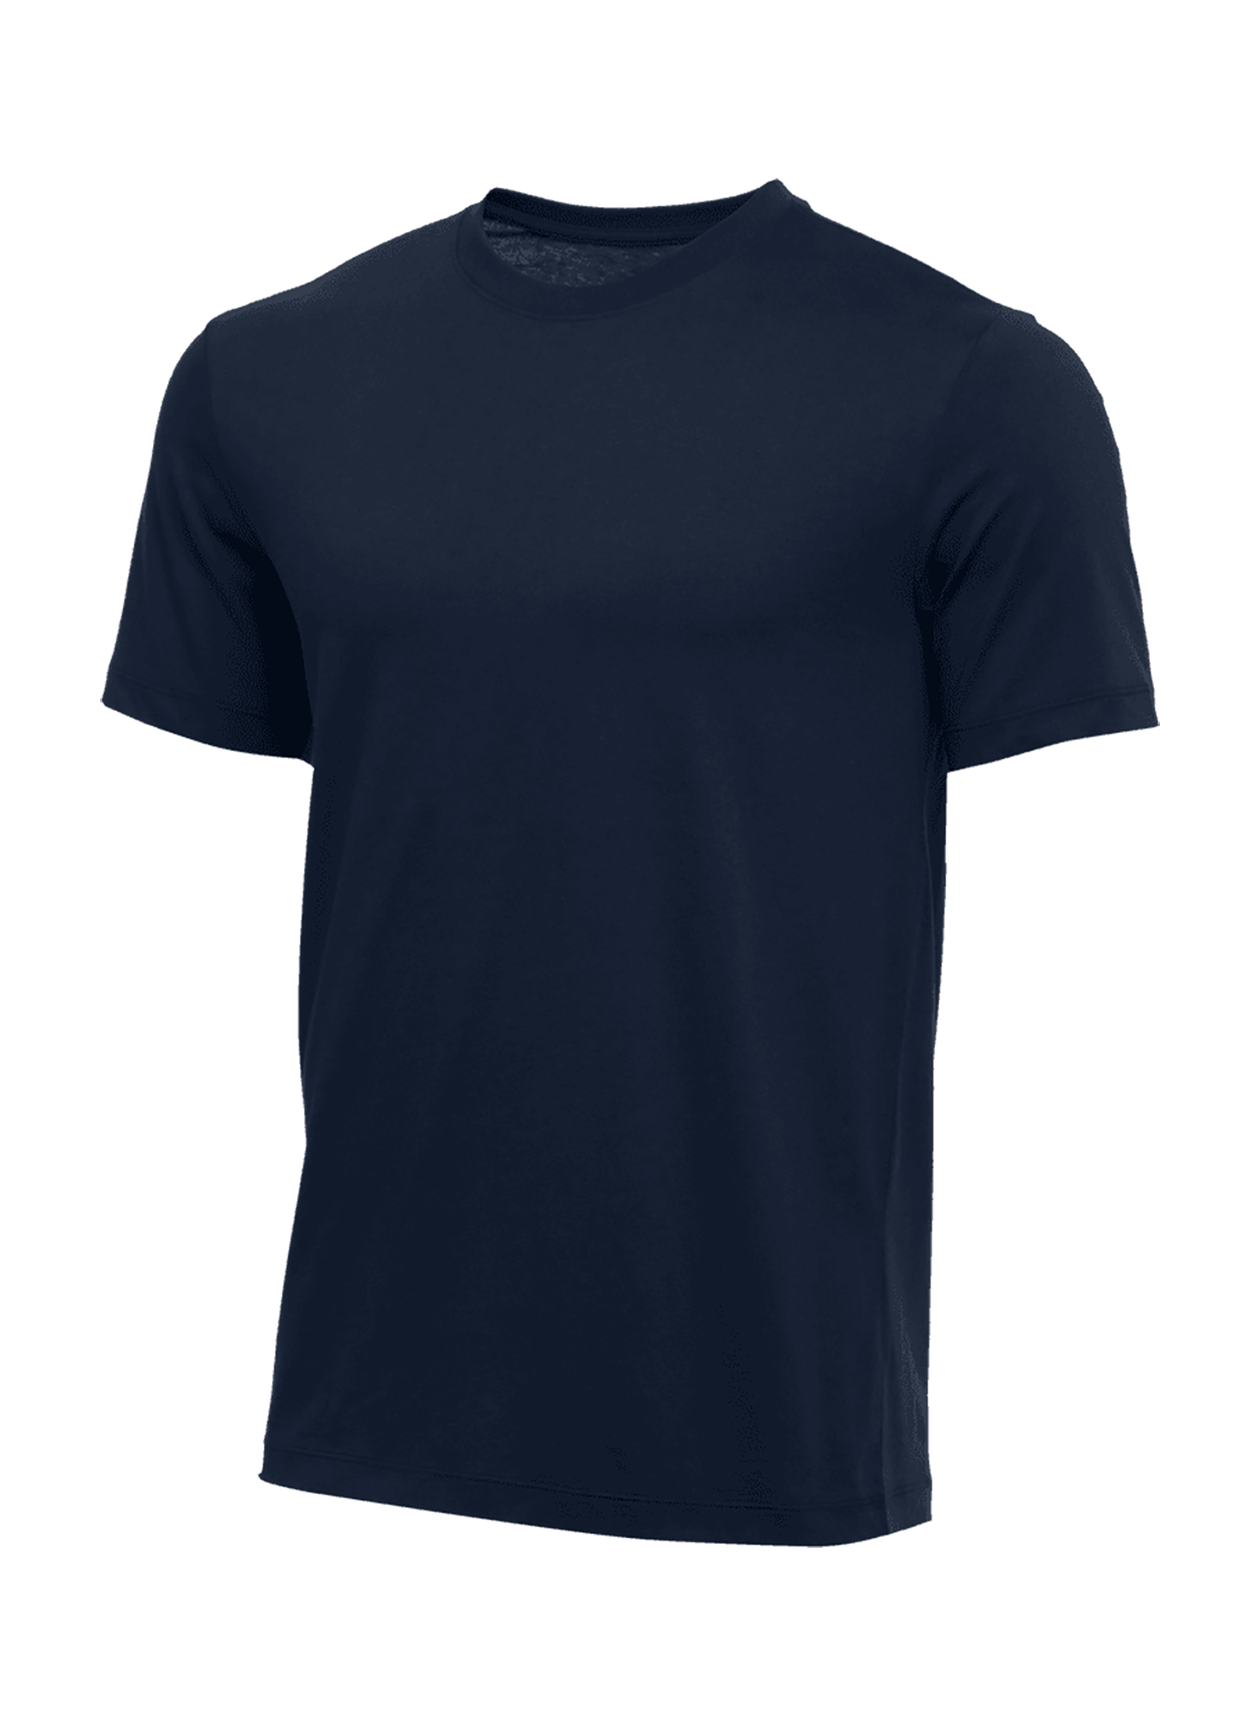 Nike Men's College Navy Training T-Shirt